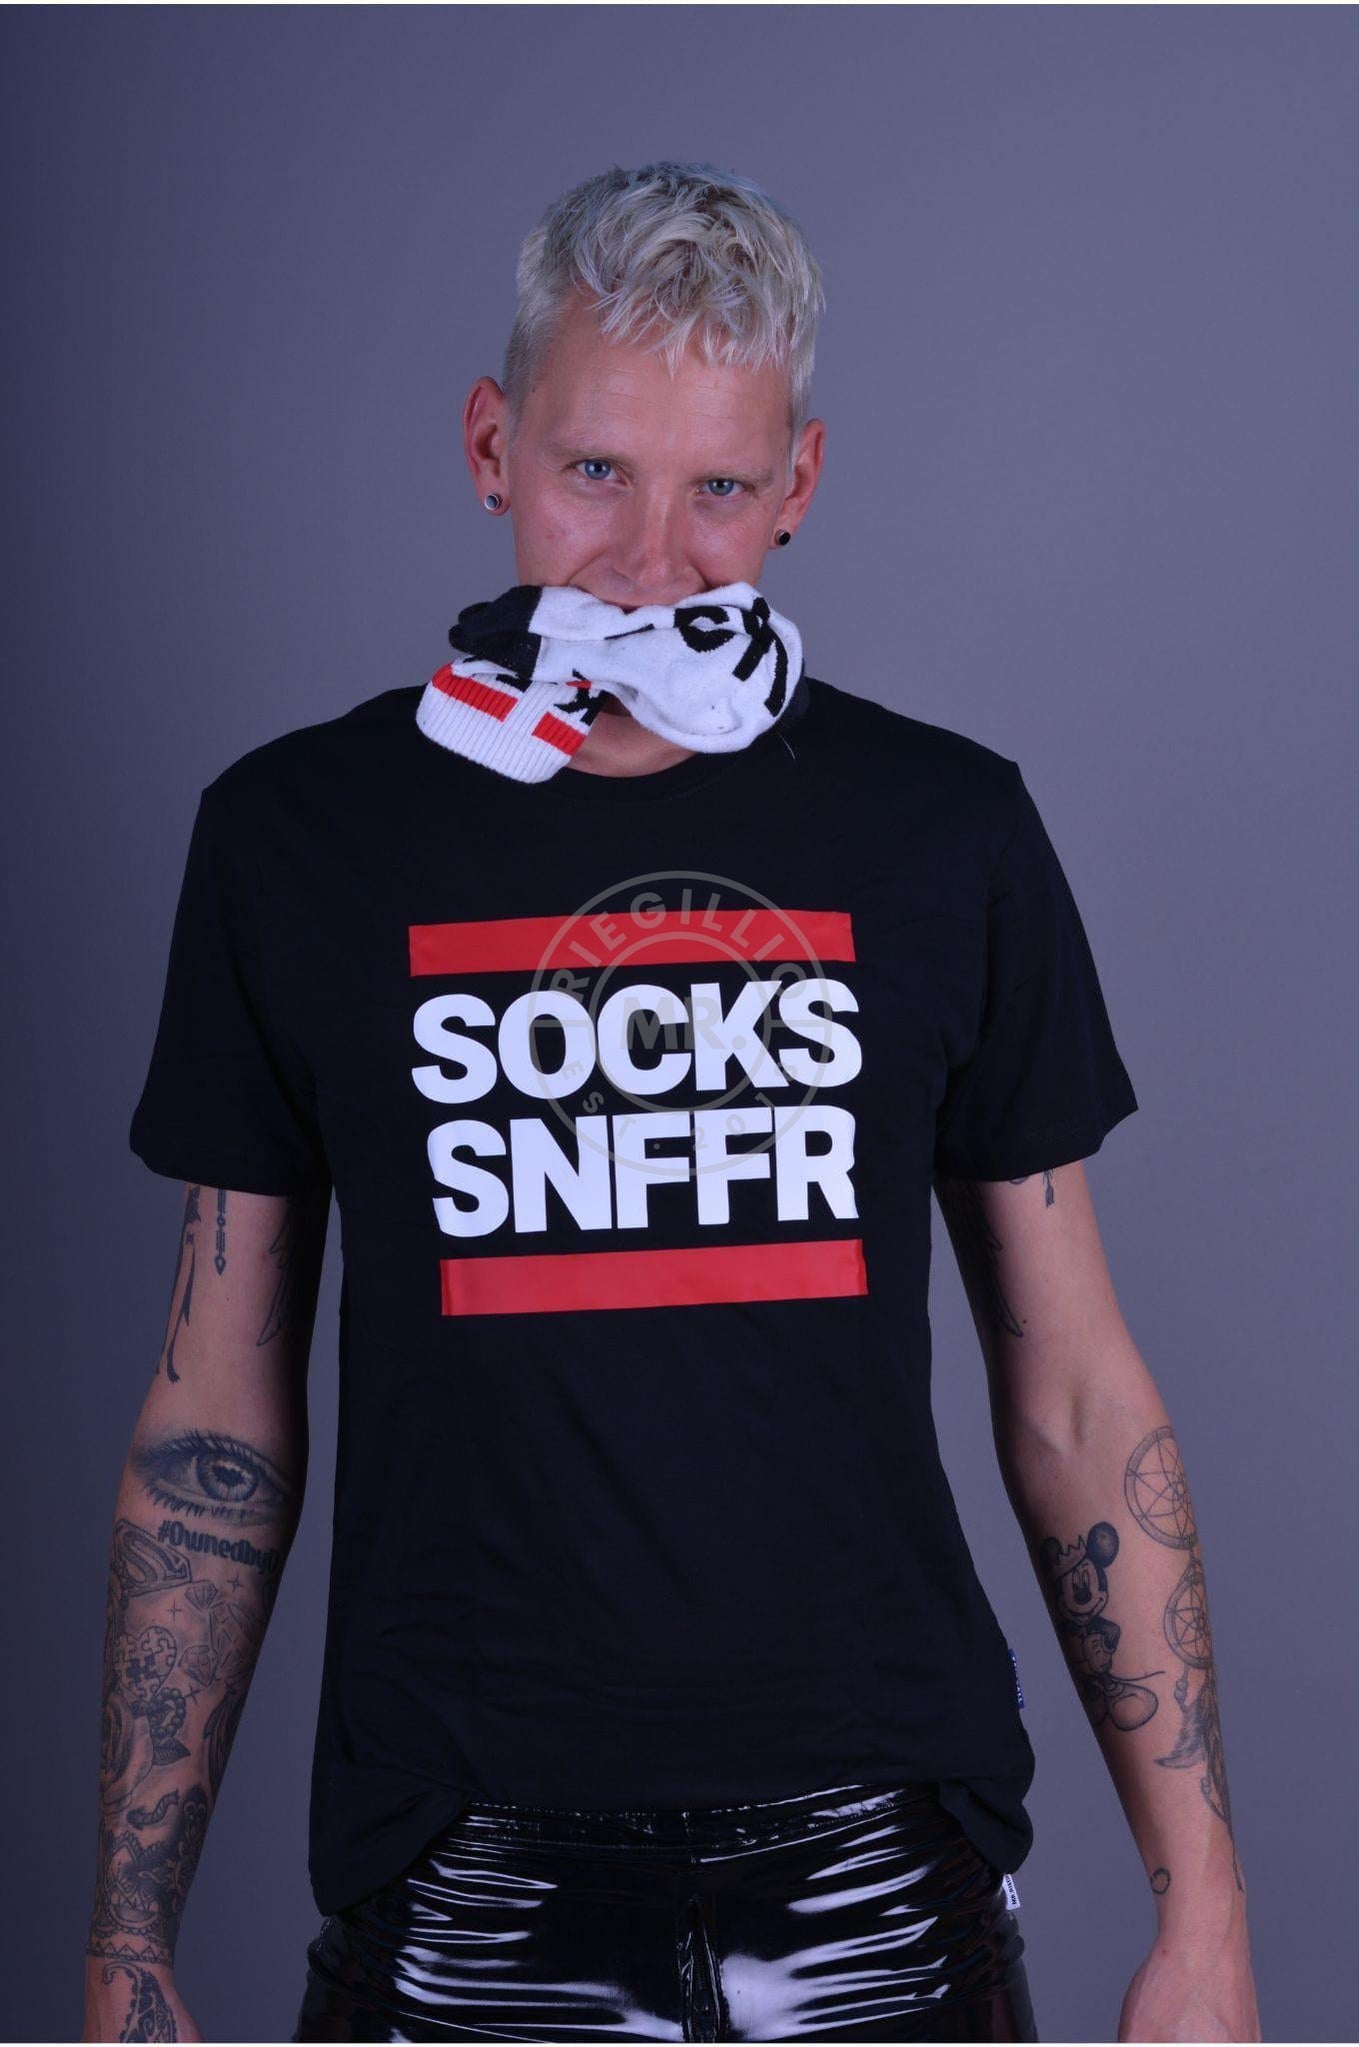 Sk8erboy SOCKS SNFFR T-Shirt at MR. Riegillio